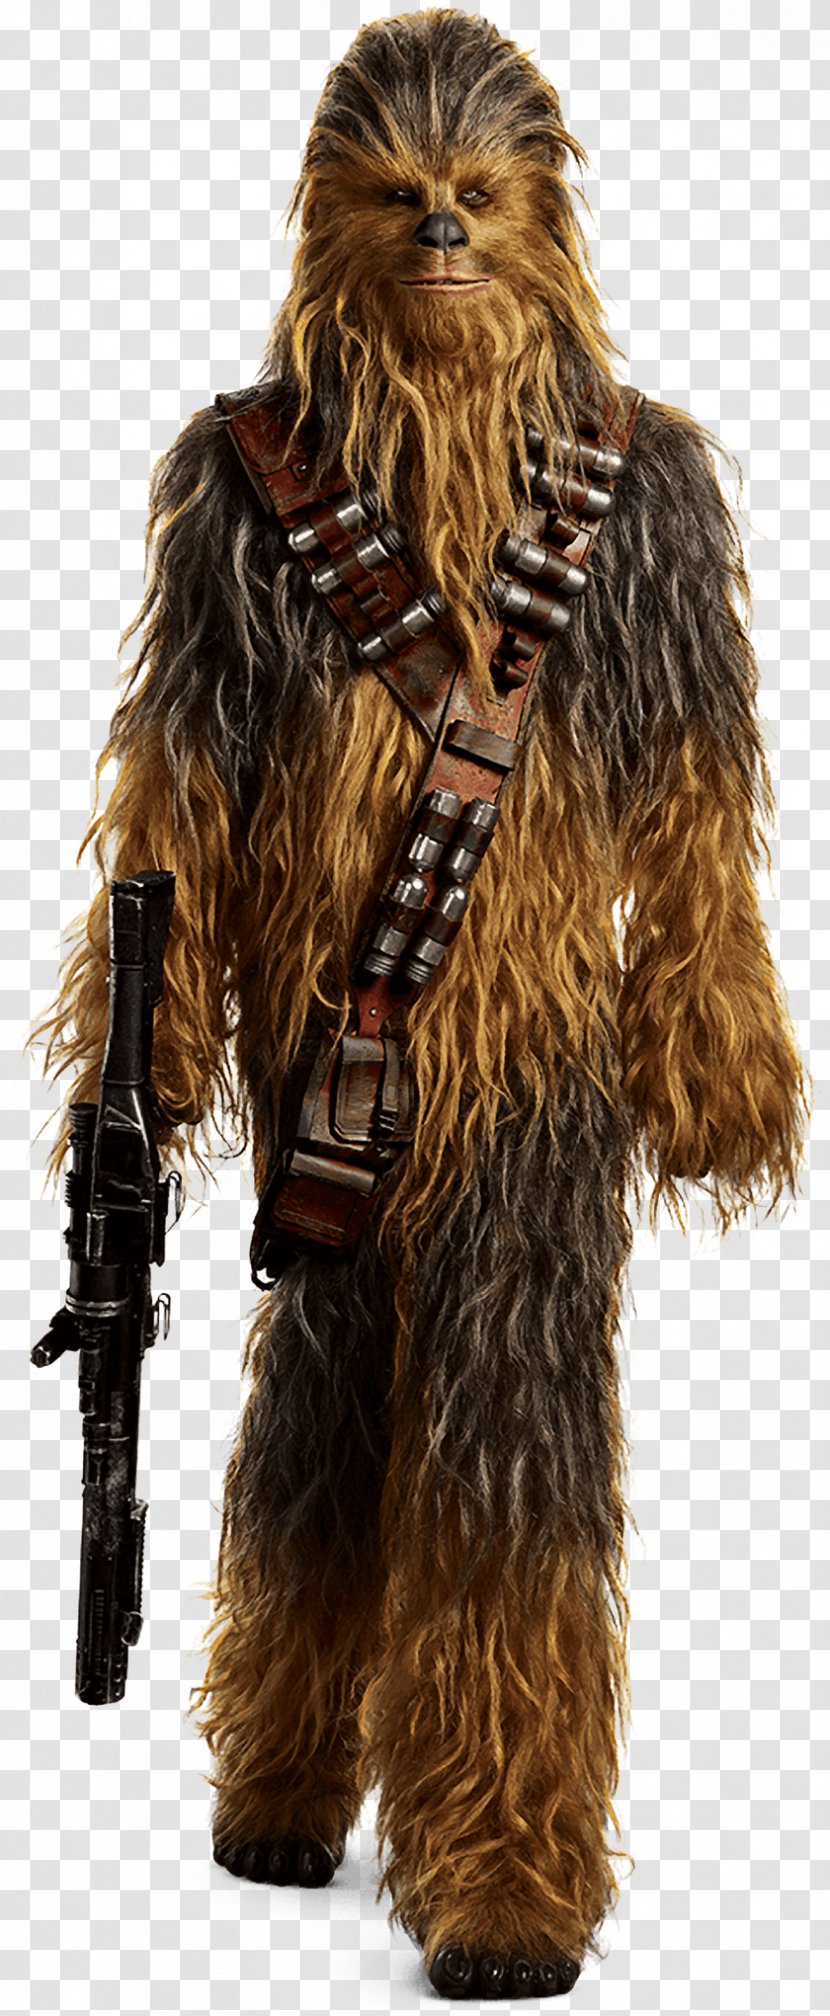 Chewbacca Lando Calrissian Qi'ra Han Solo Star Wars - Alden Ehrenreich - Millennium Falcon Transparent PNG